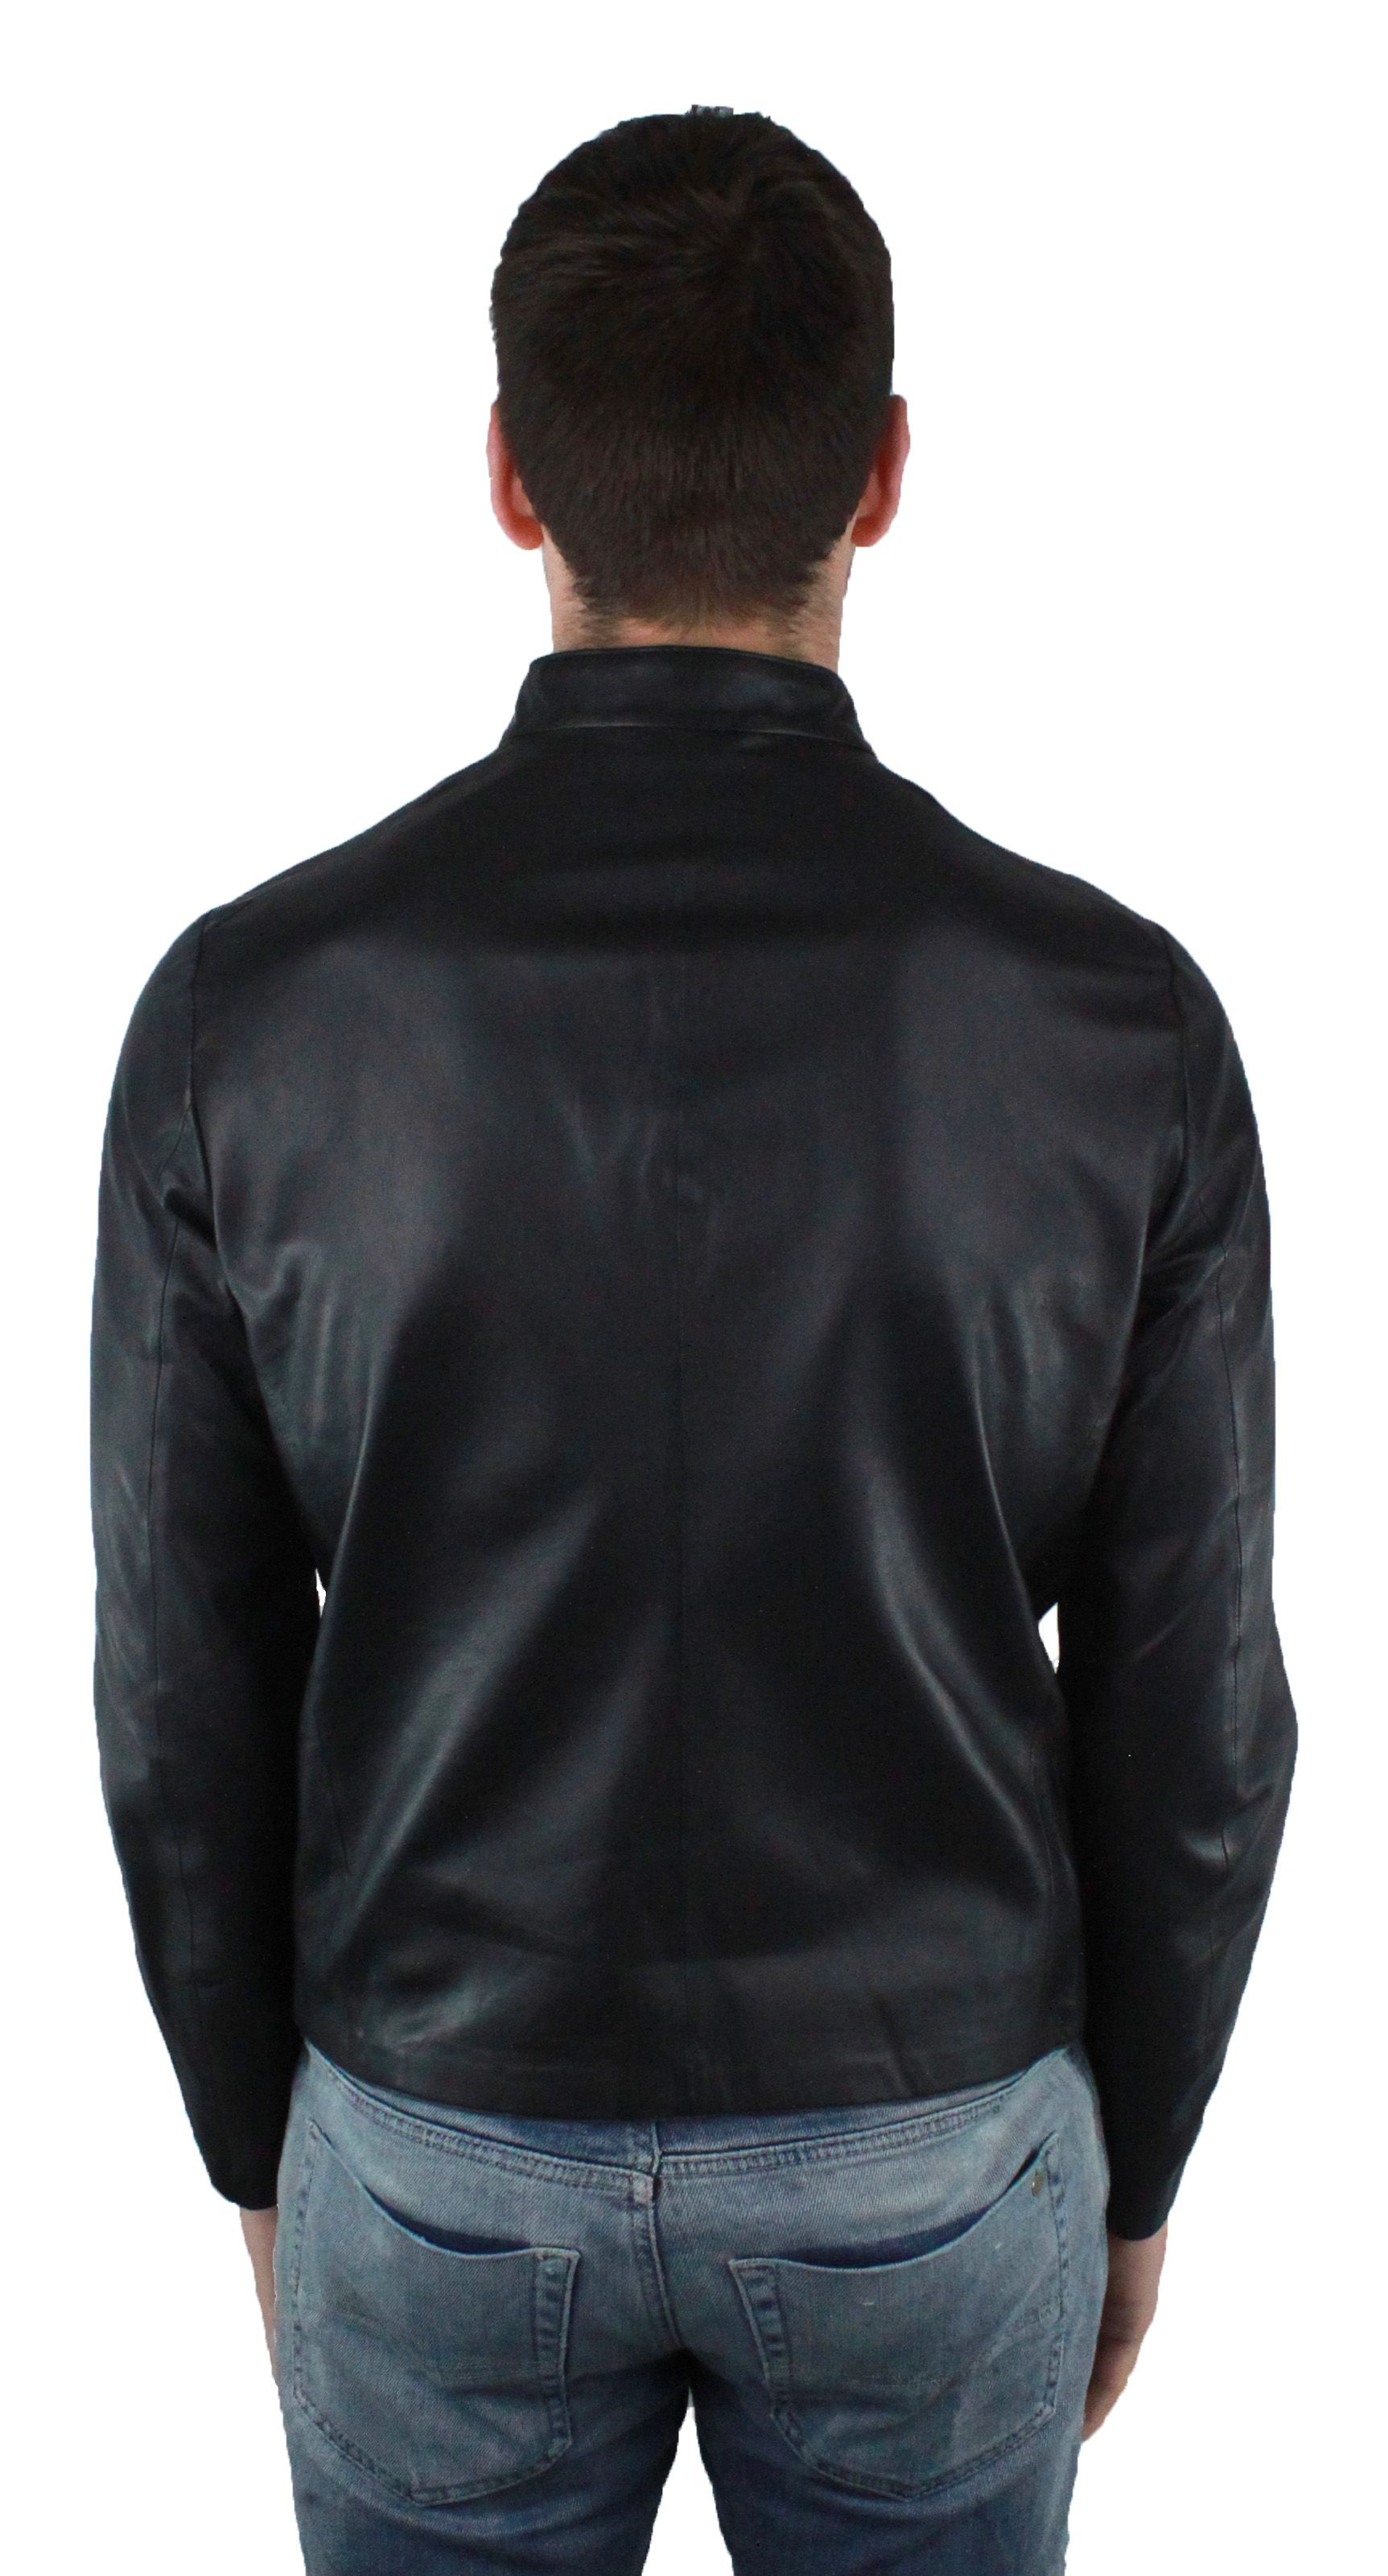 Emporio Armani 3Z1BM5 1LBAZ 999 Leather Jacket. 100% Leather. Central Zip Closure. Branded Badge On Left Pocket. Chinese Collar. Product Code: 3Z1BM5 1BLAZ 0999